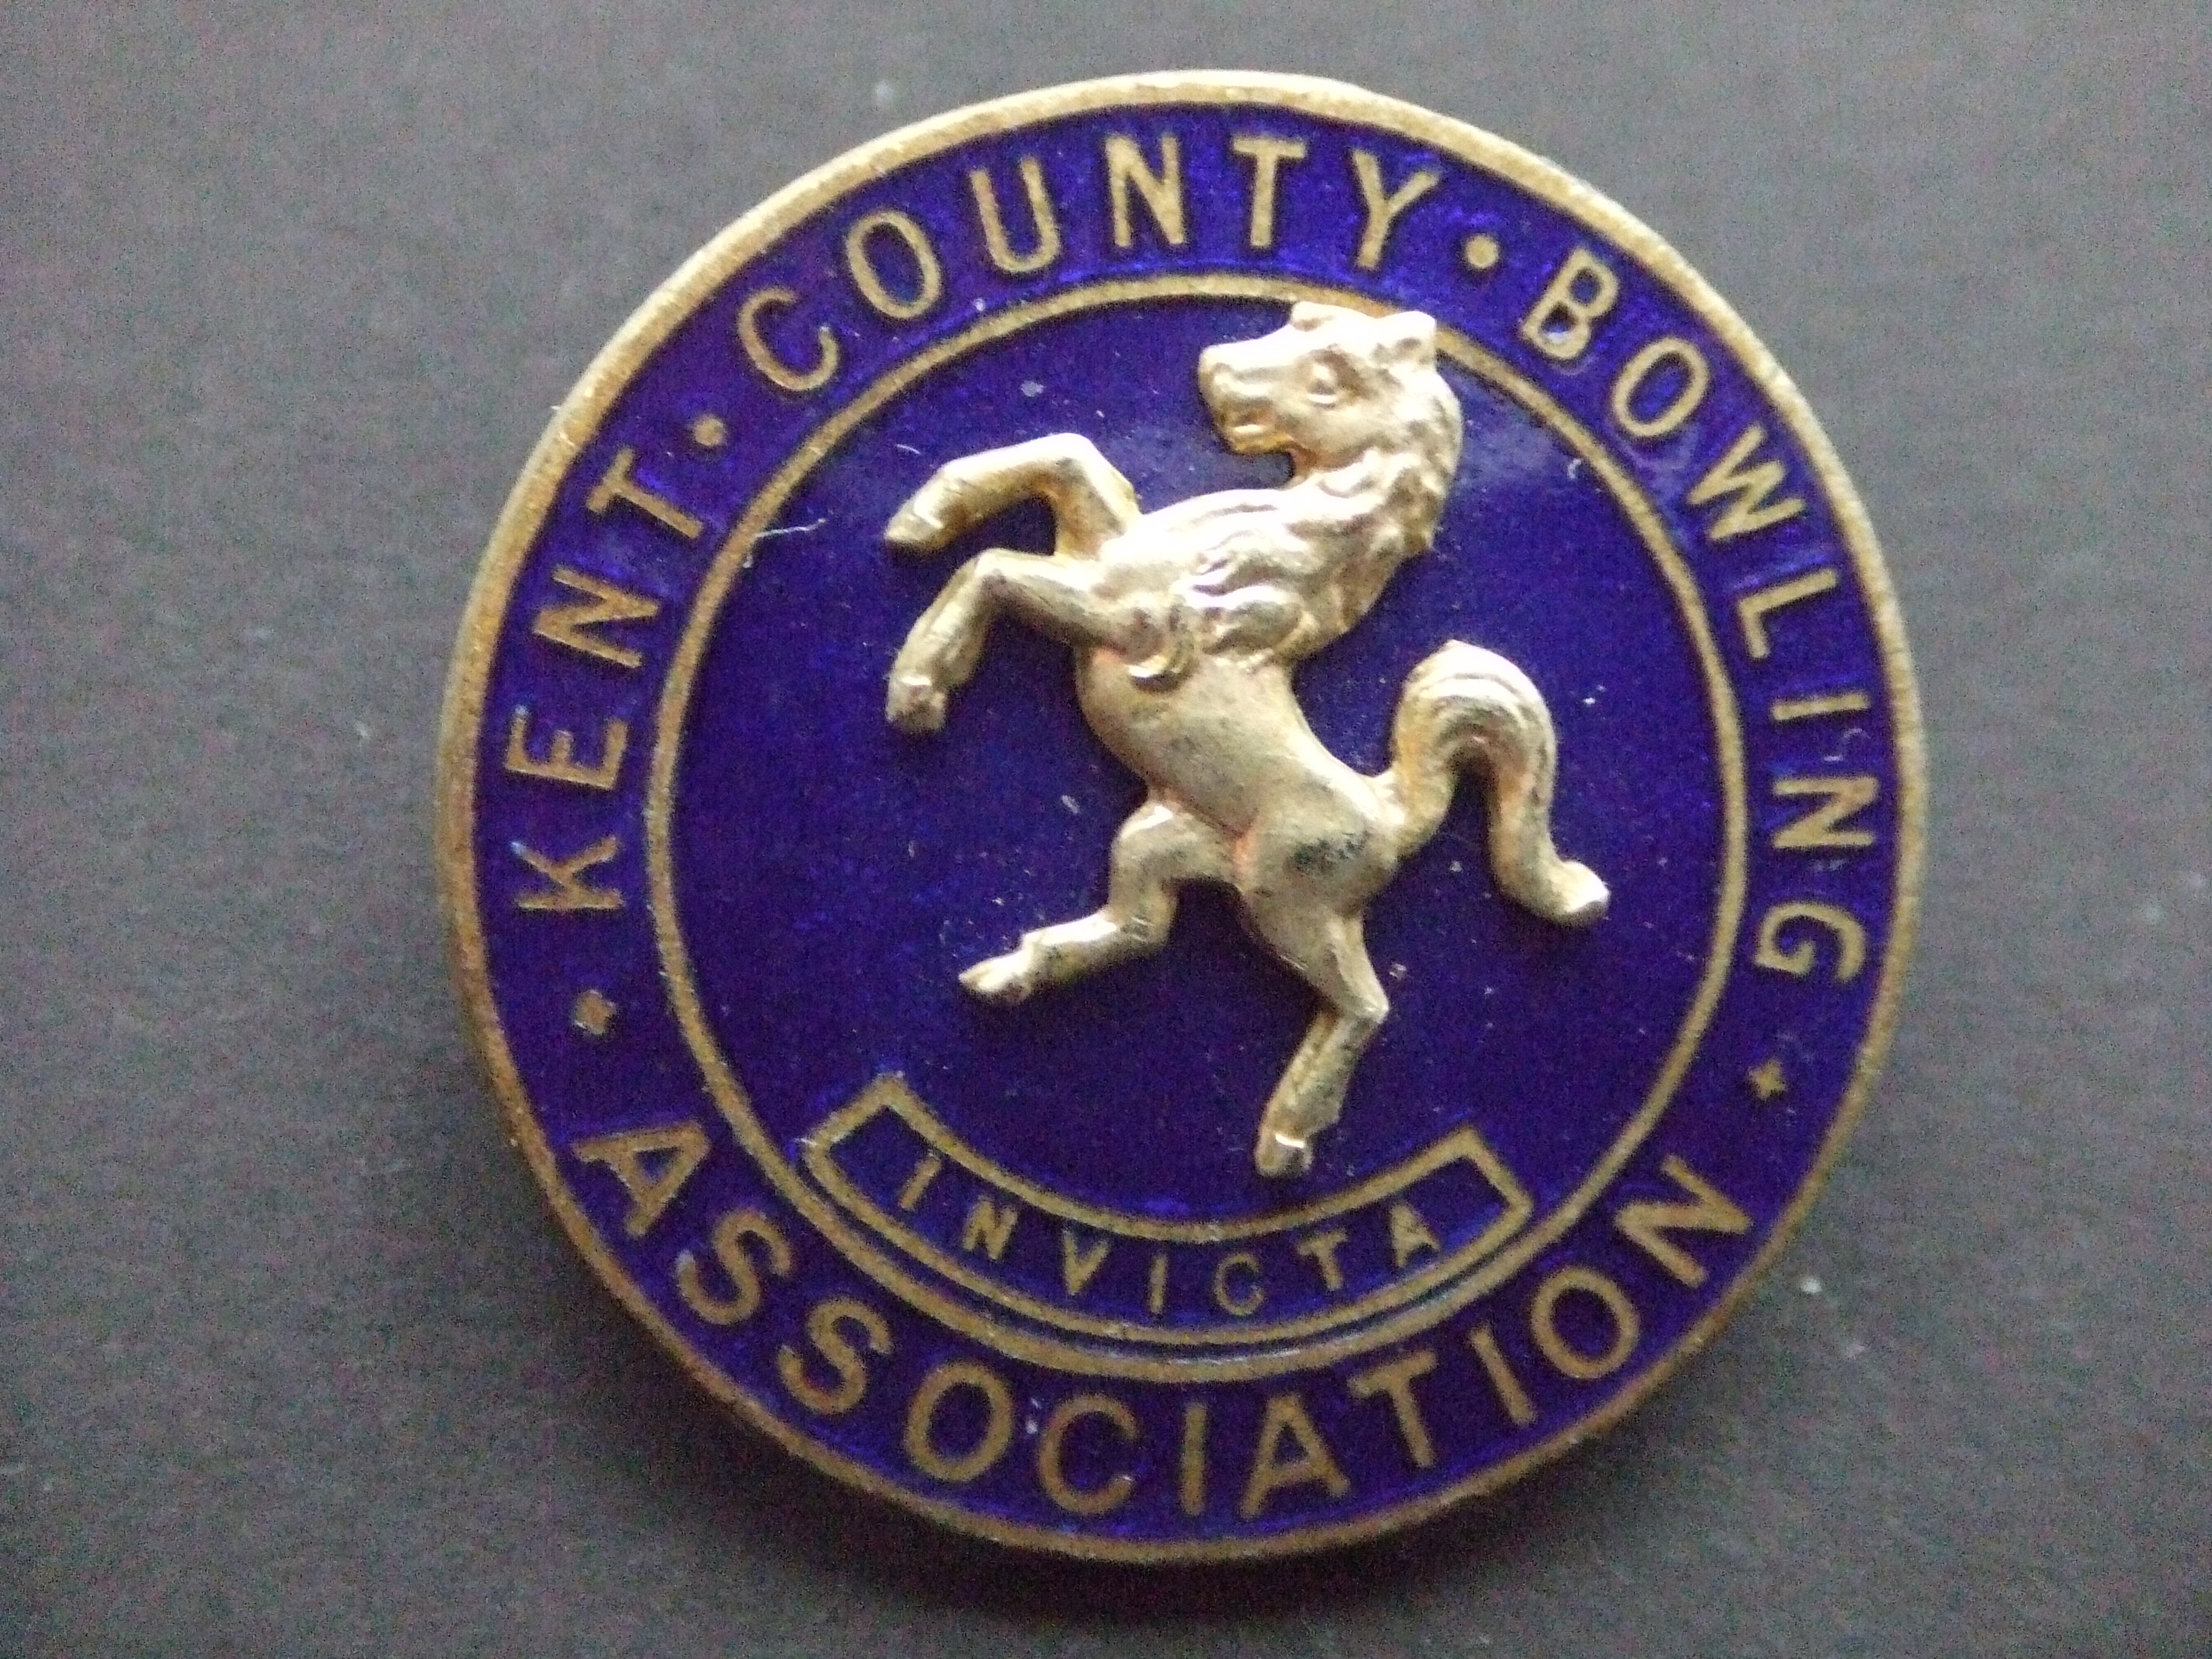 Bowling Association Kent County England